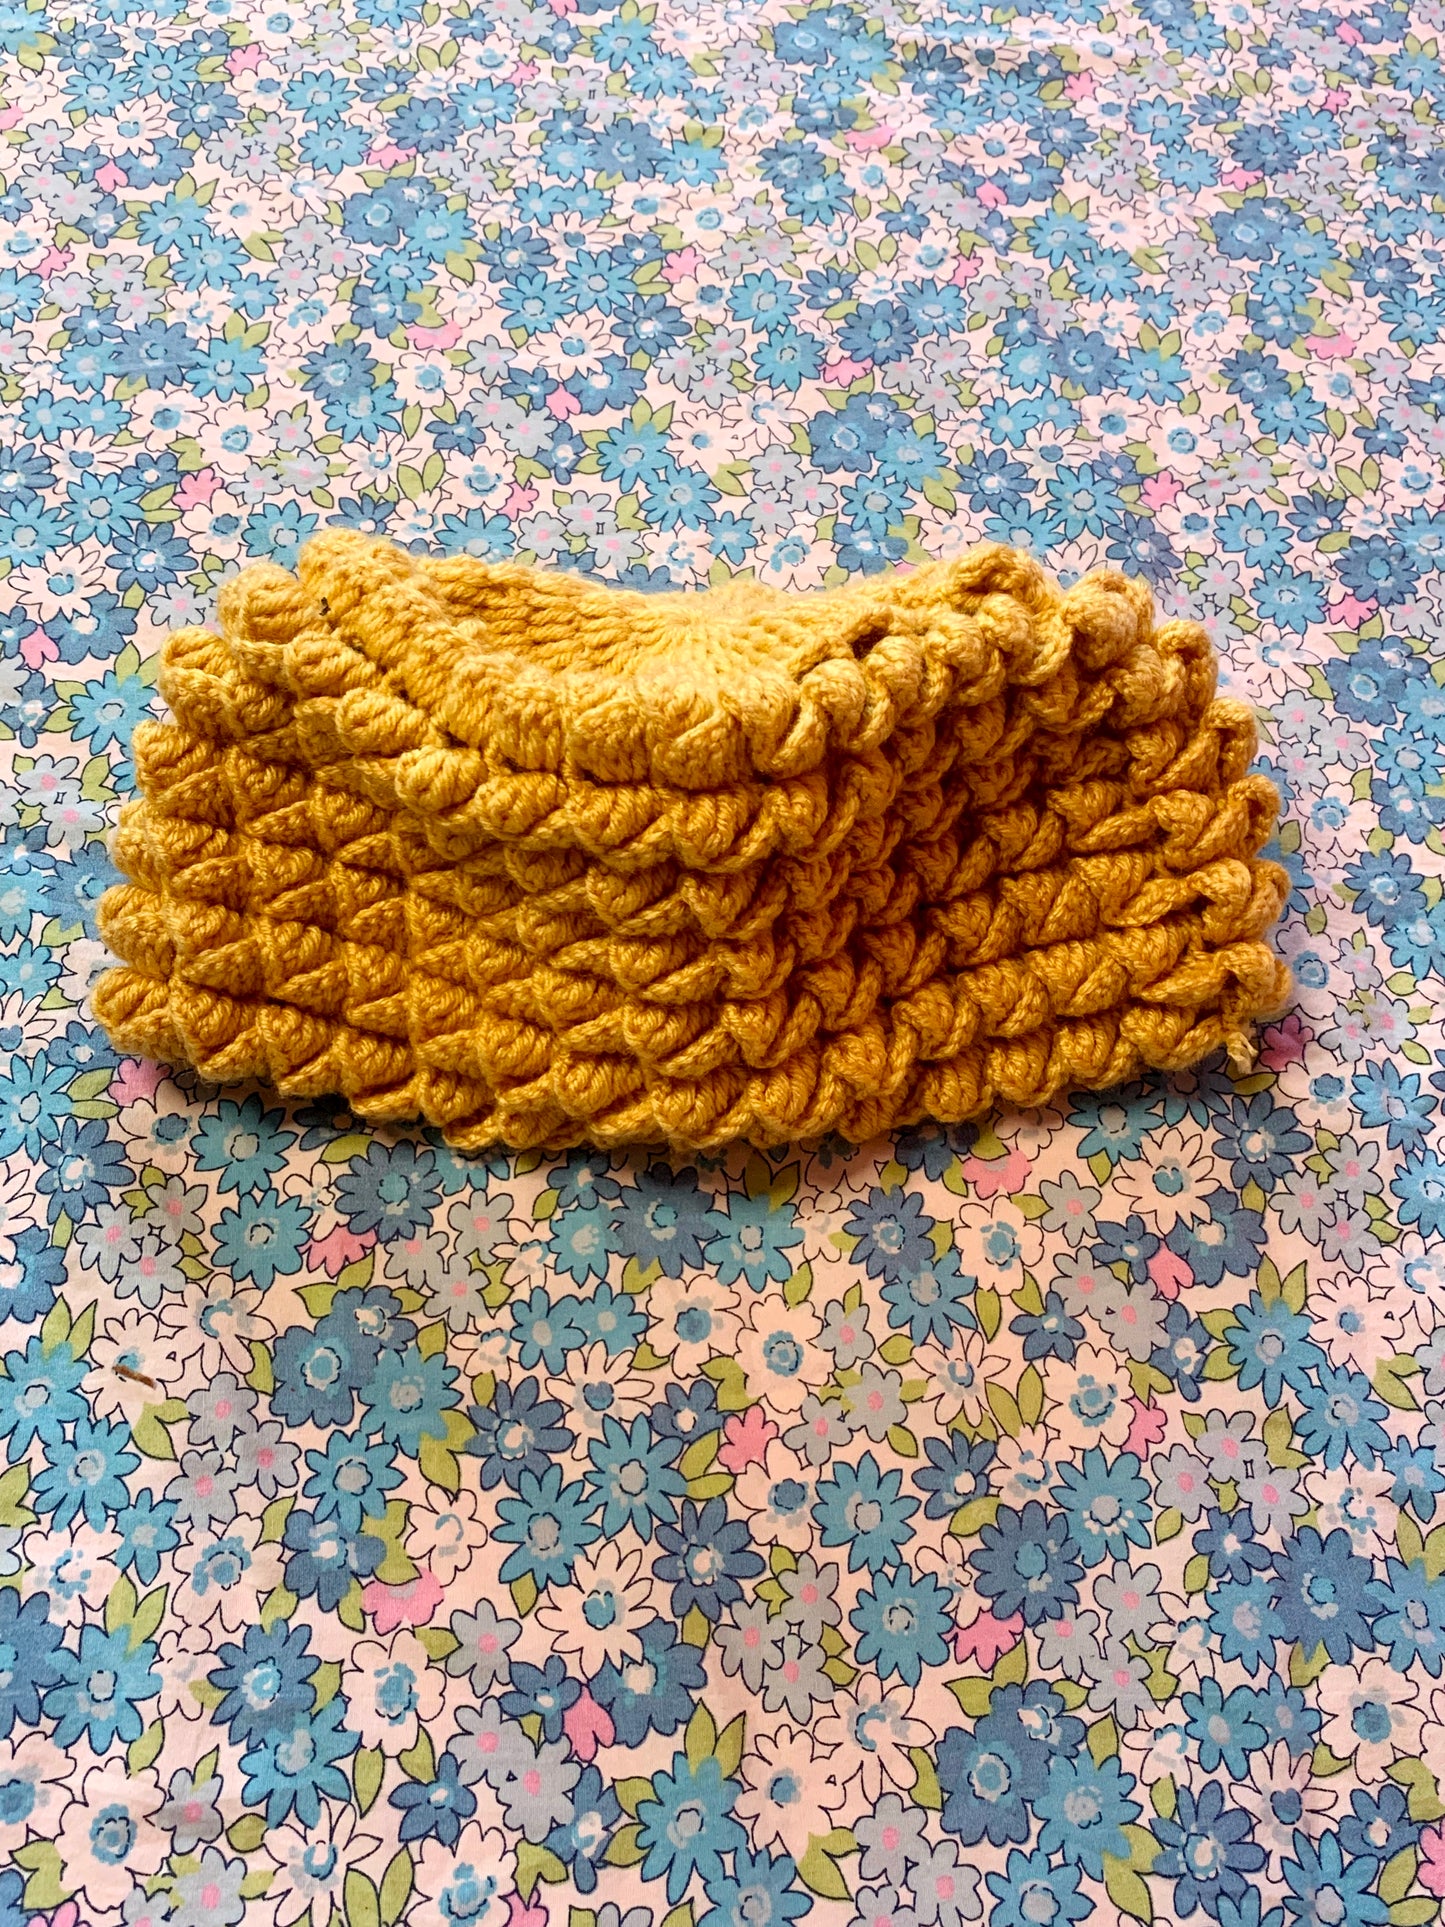 Yellow Crochet Pillbox Hat